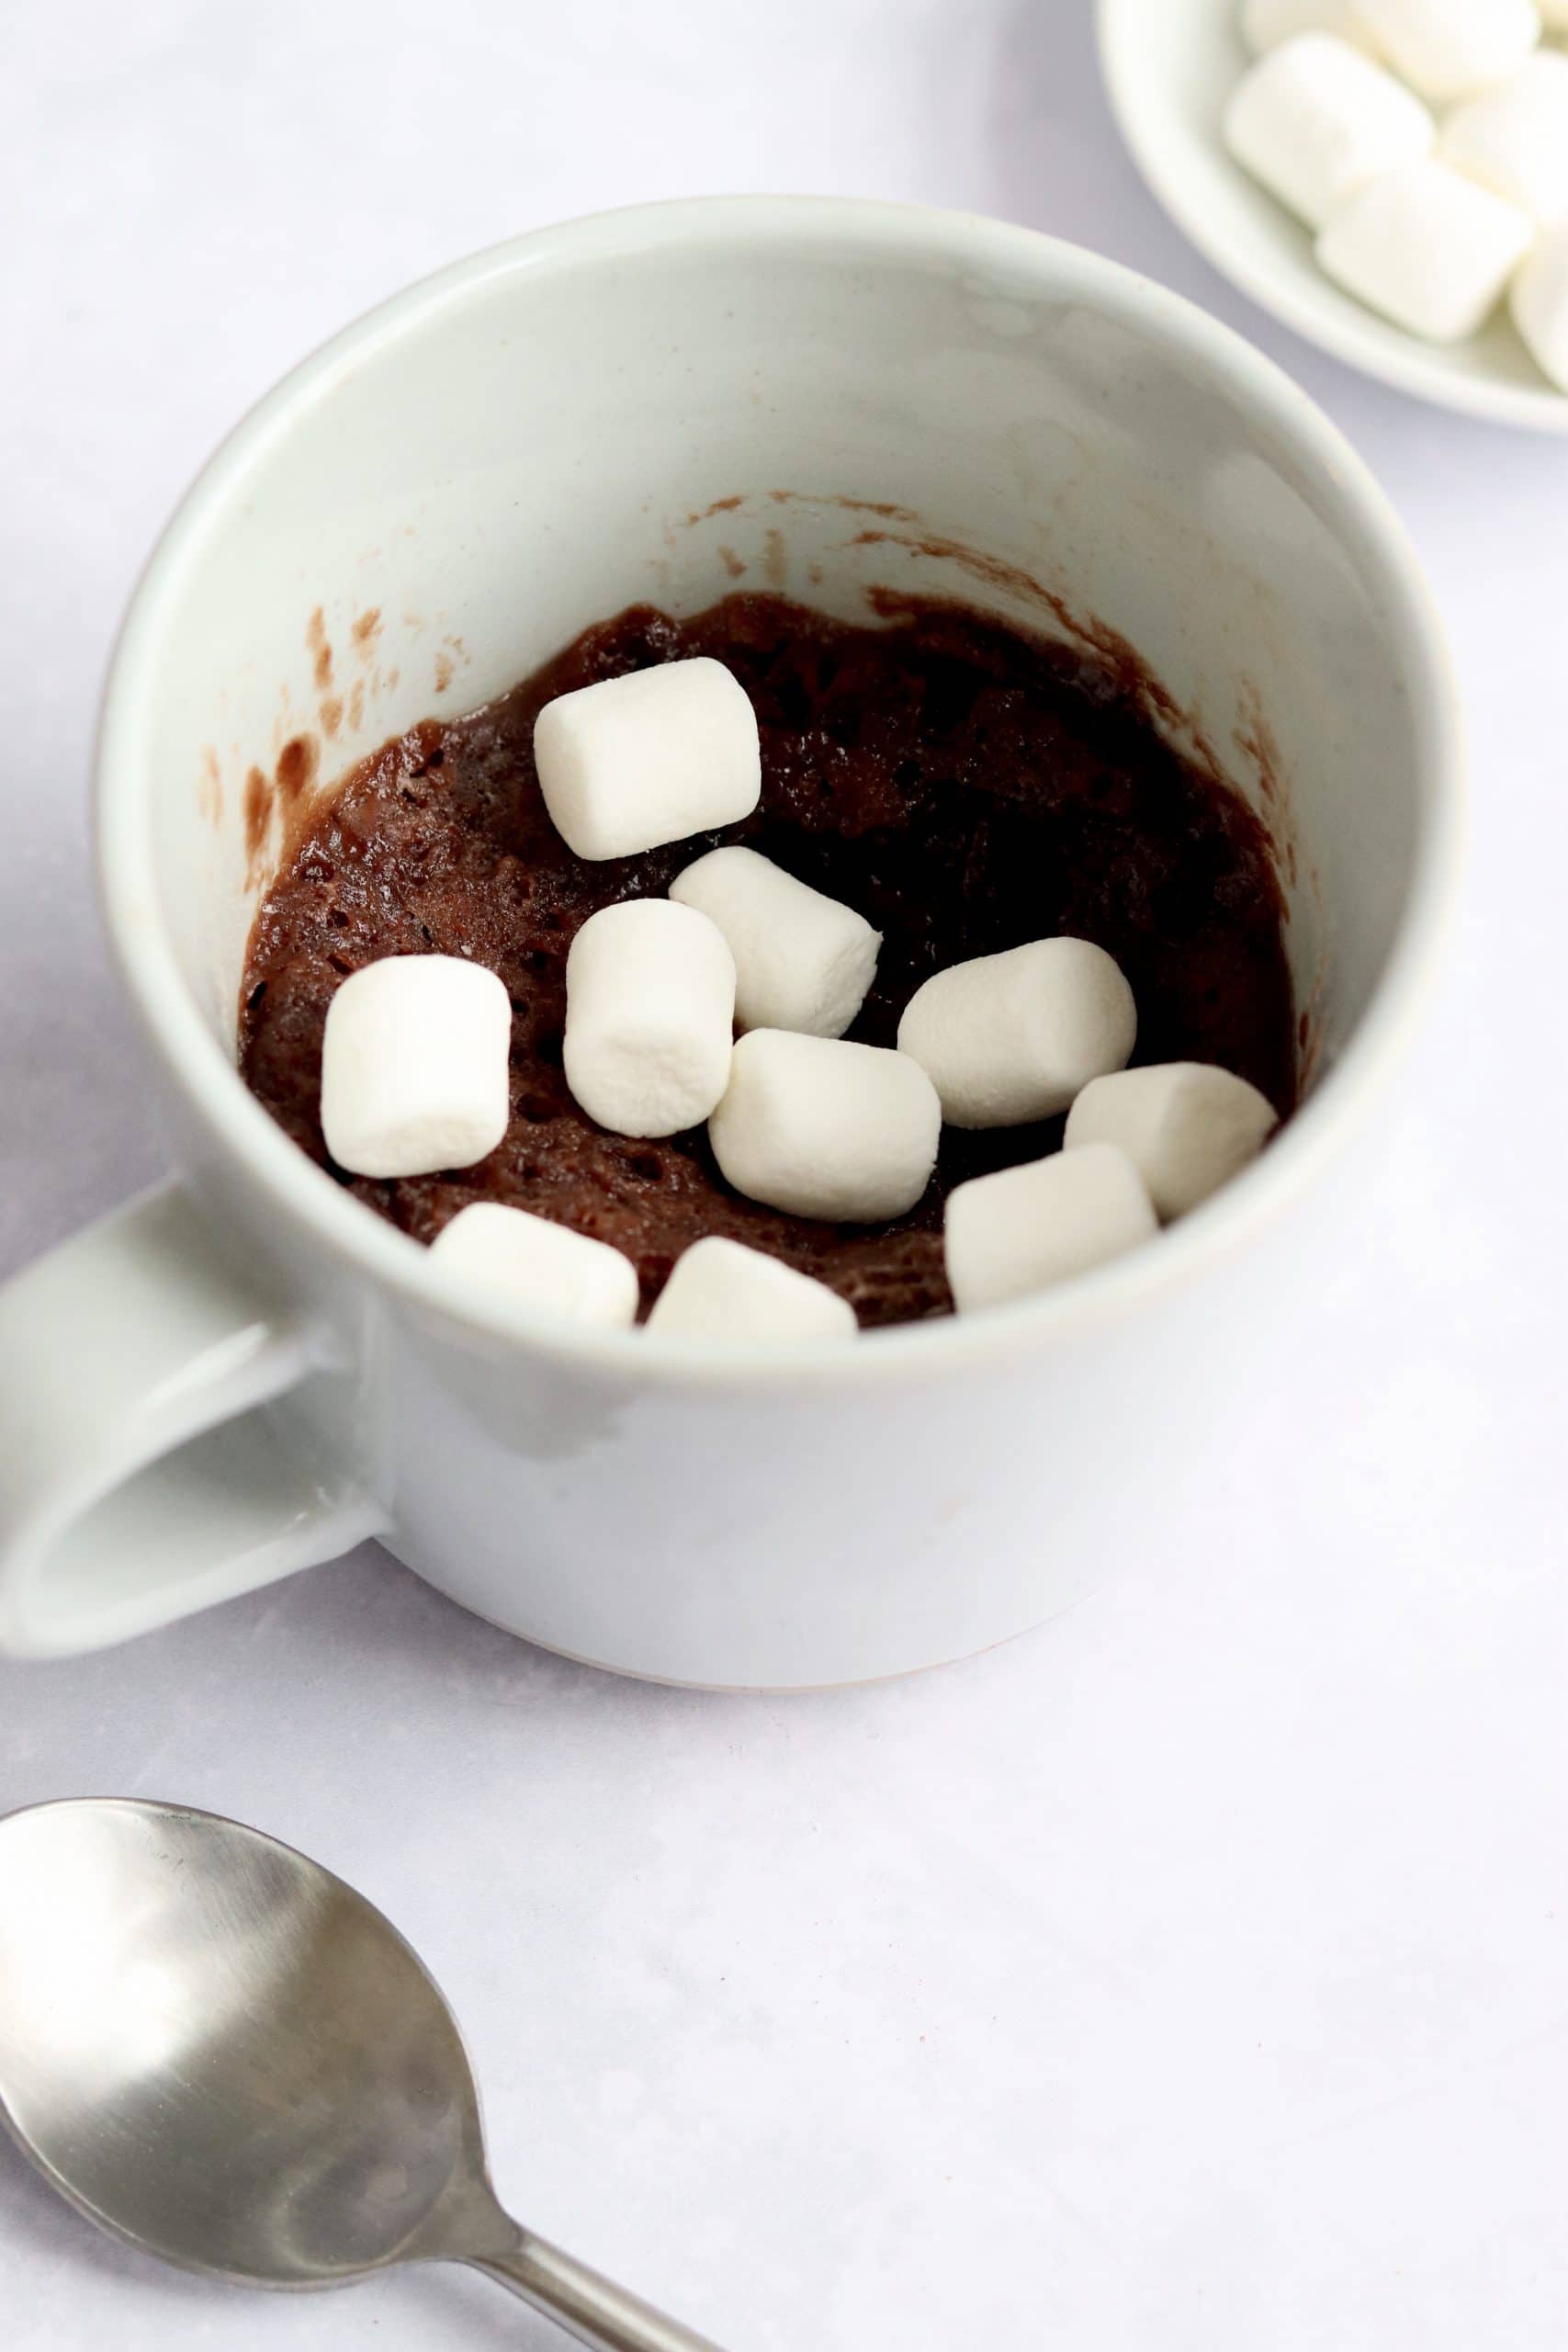 Microwave mug cake made using hot chocolate mix